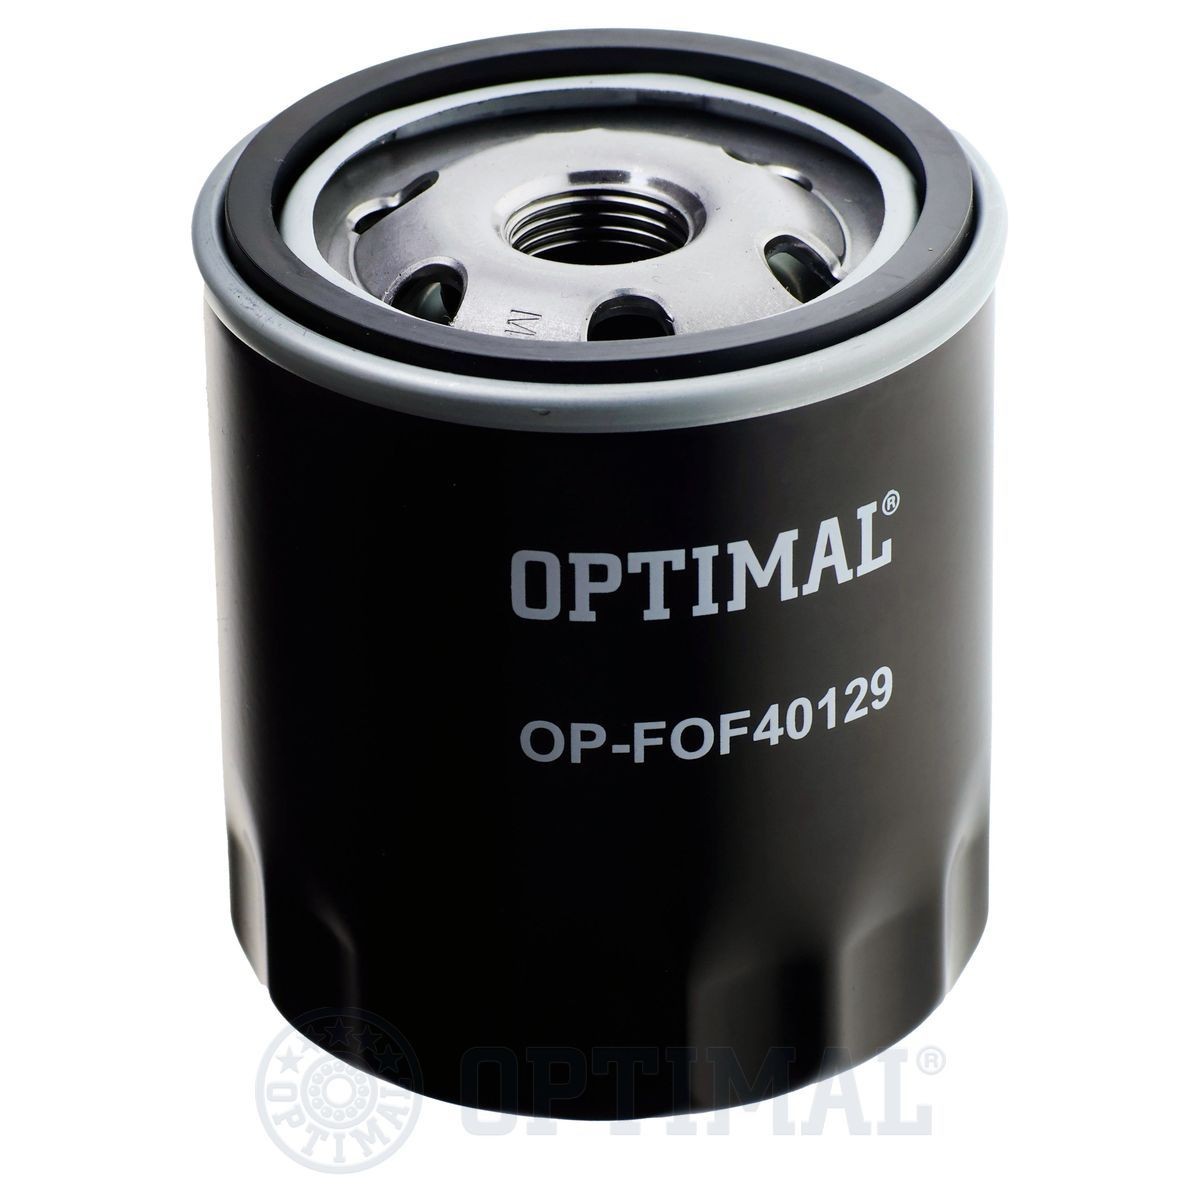 OPTIMAL OP-FOF40129 Oil filter EC 947 974 06